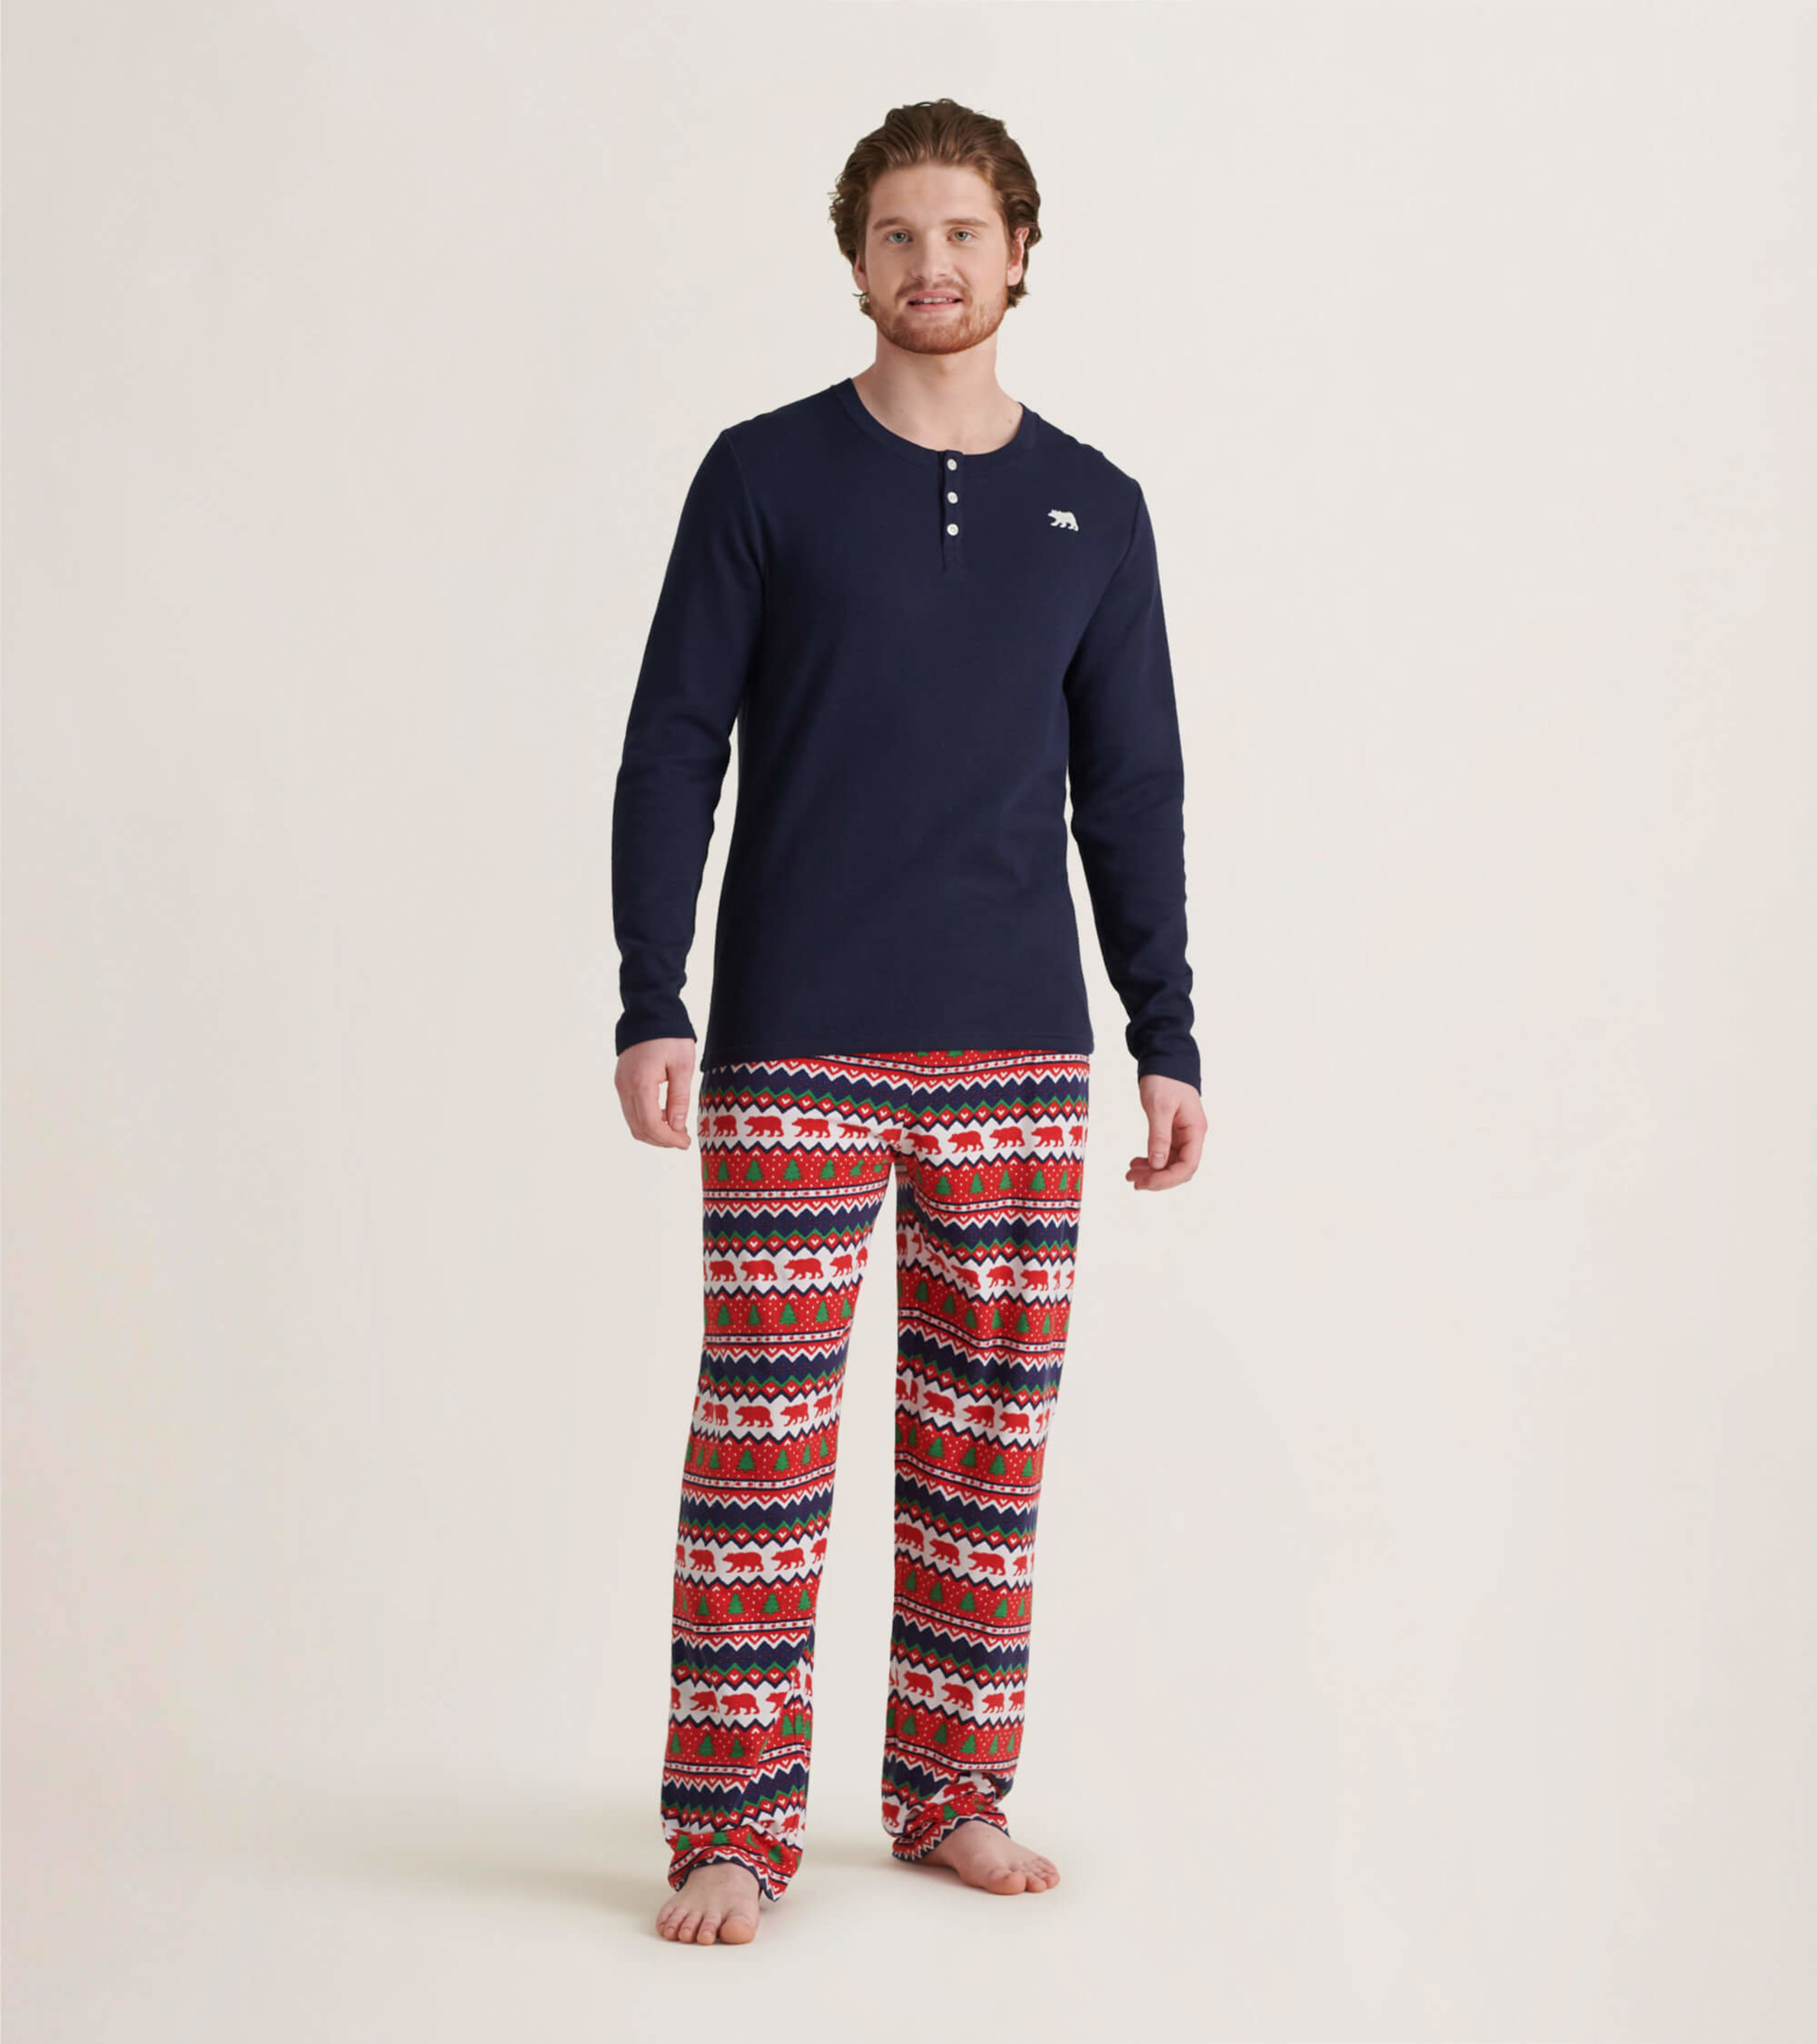 LITTLEBLUE Buffalo Plaid Men's Pyjama Bottom